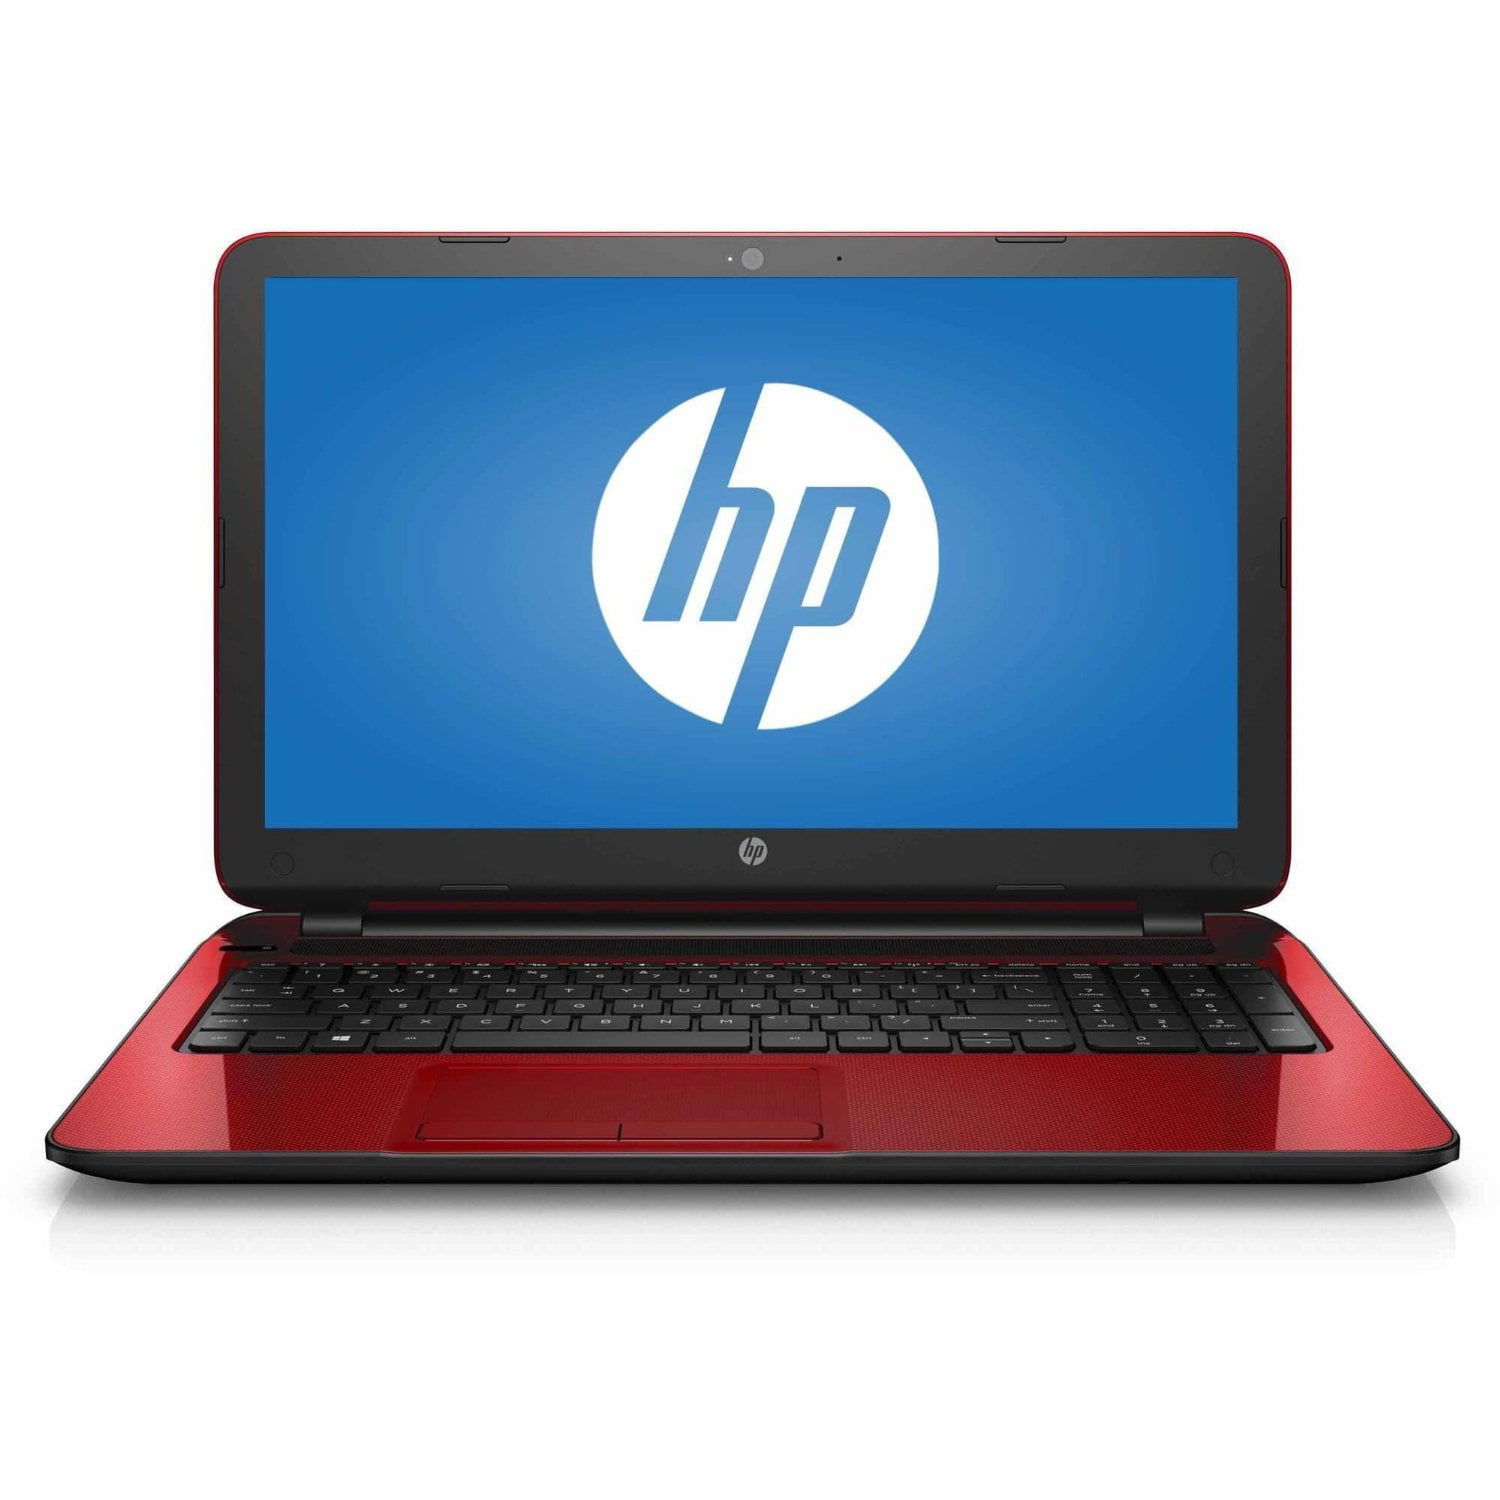 analoog Verduisteren behuizing 2017 HP Flyer Red 15.6 Inch Premium Flagship Laptop (Intel Pentium Quad-Core  N3540 Processor up to 2.66GHz, 4GB RAM, 500GB Hard Drive, DVD Drive, HD  Webcam, Windows 10 Home) (Certified Used) - Walmart.com